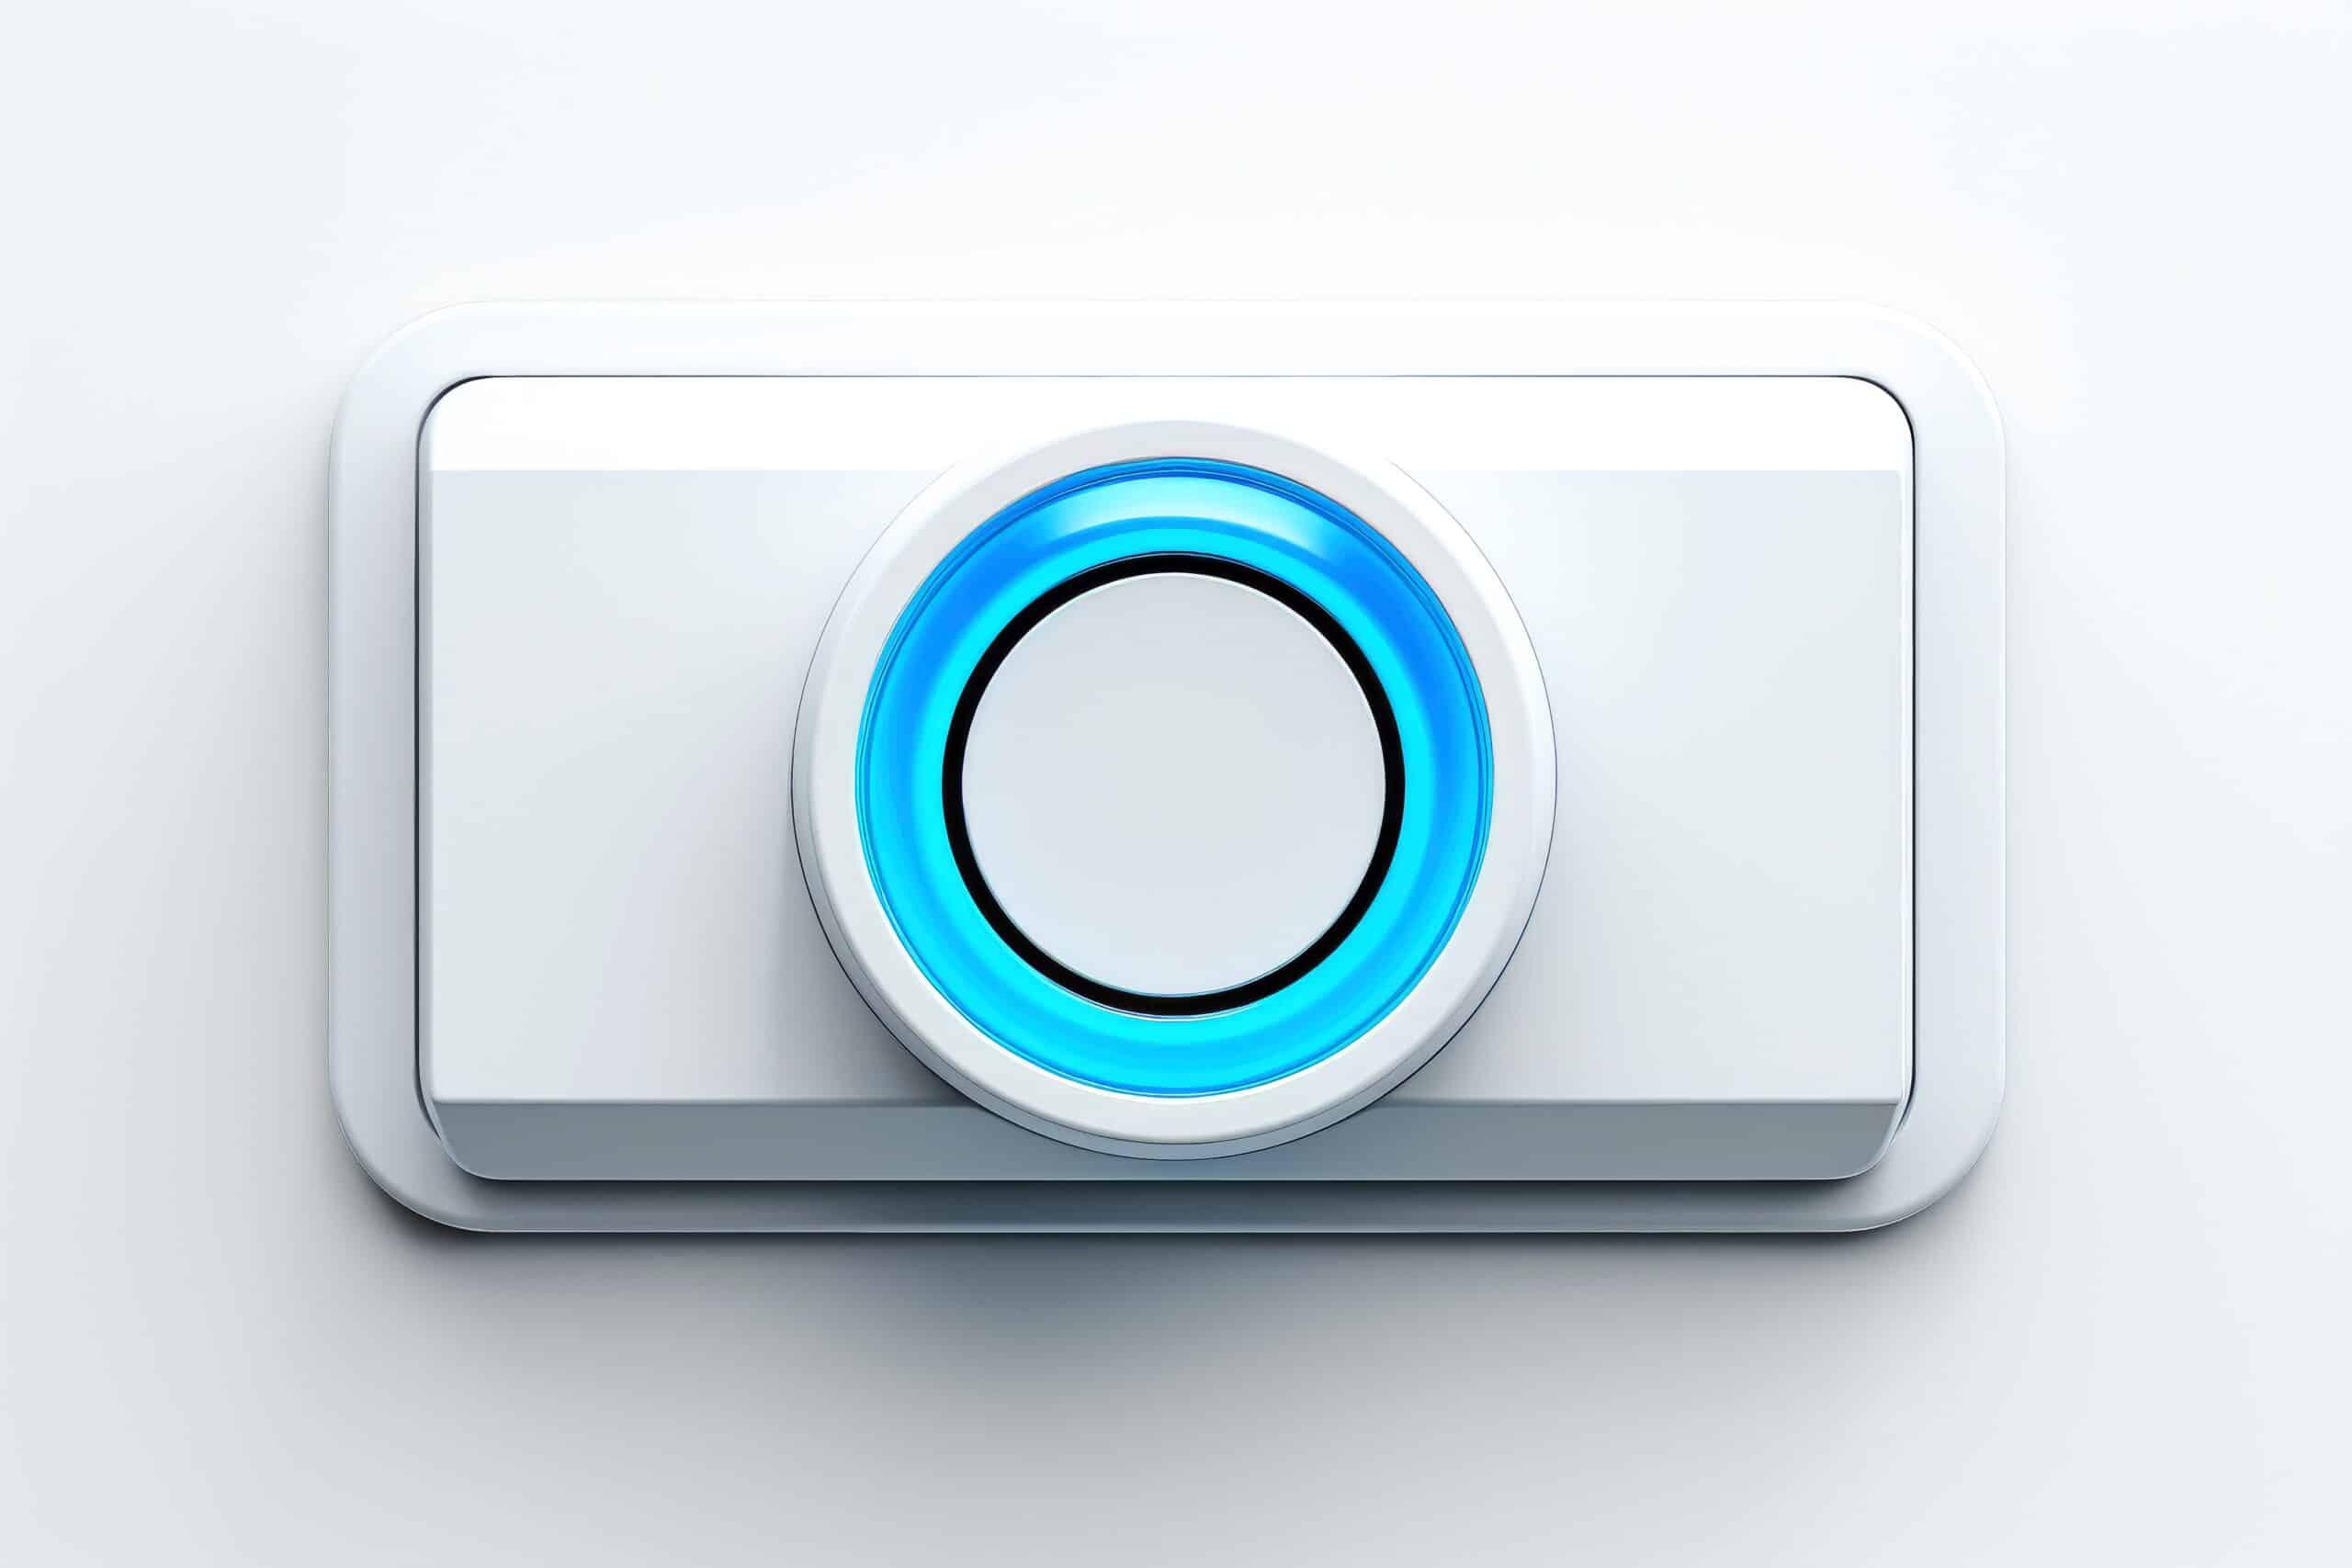 www.appr.com : How To Install A Smart Doorbell?